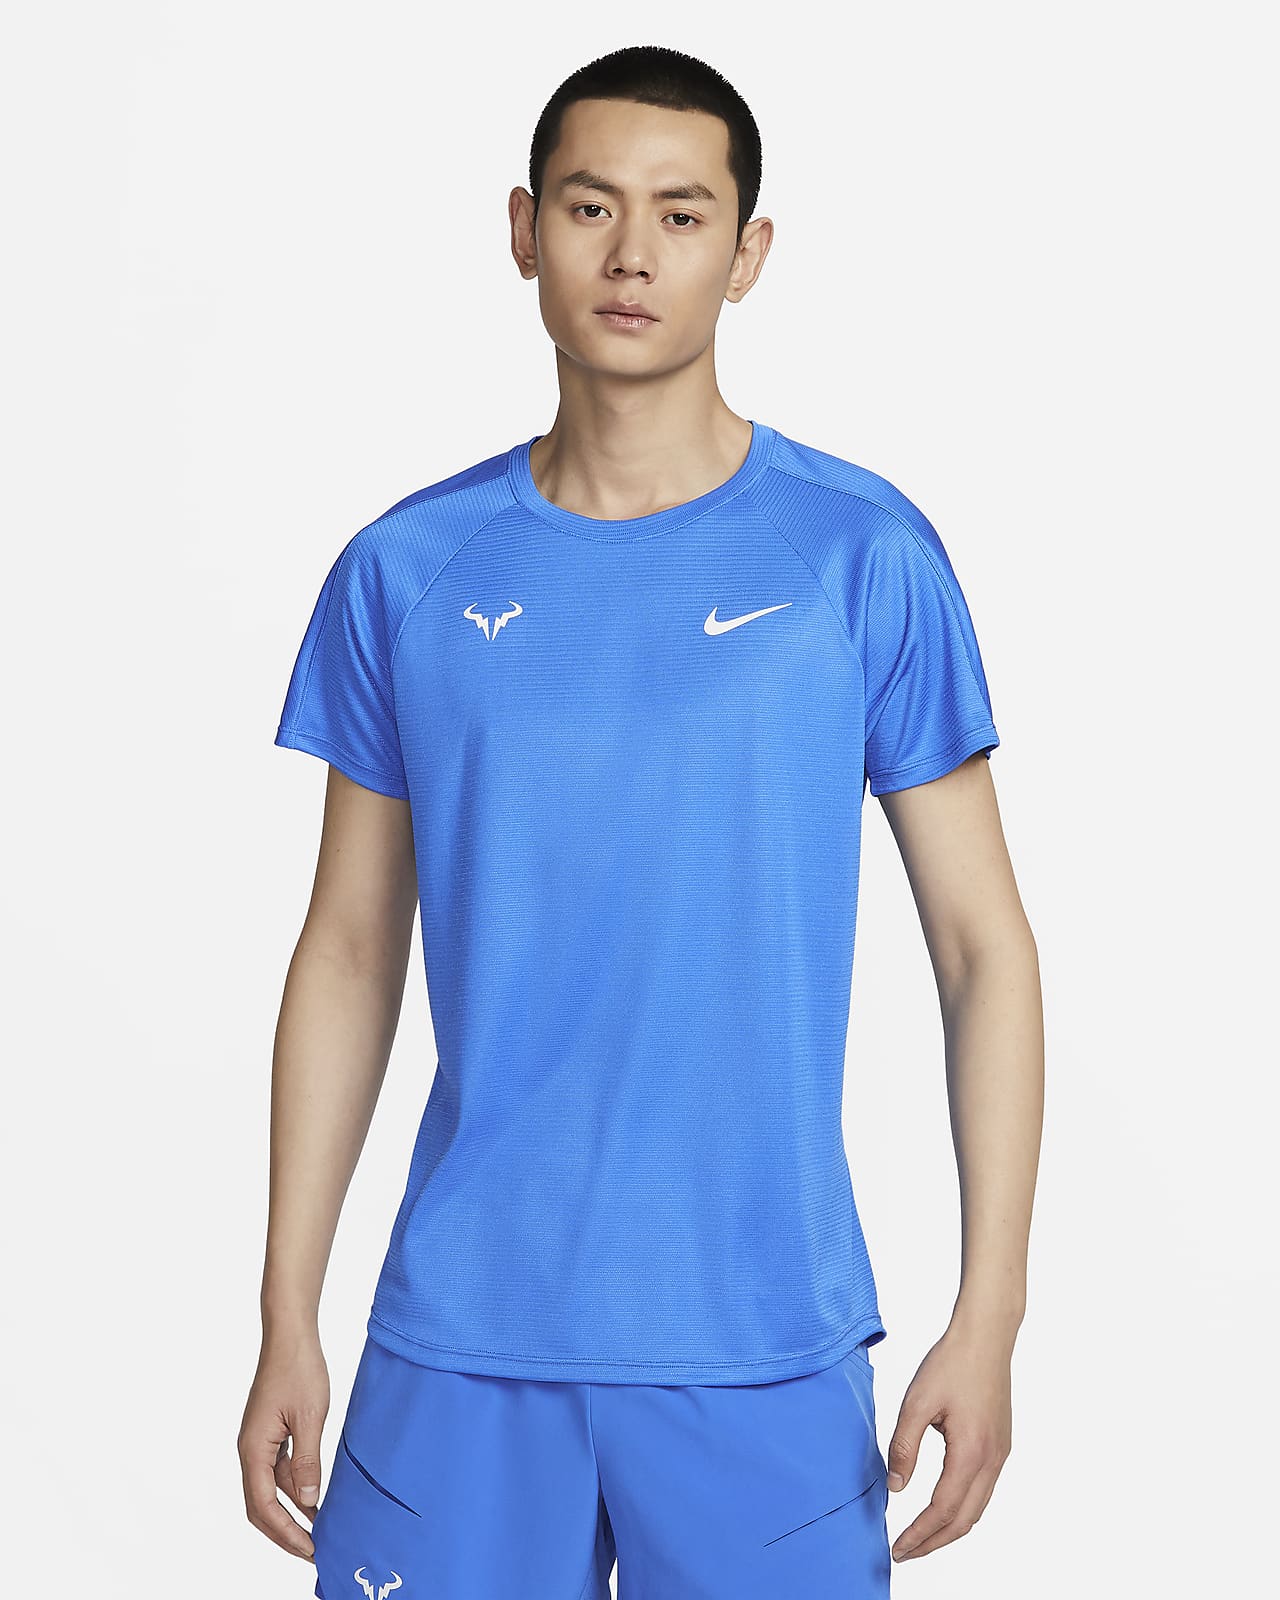 Rafa Challenger Nike Dri-FIT 男子速干短袖网球上衣